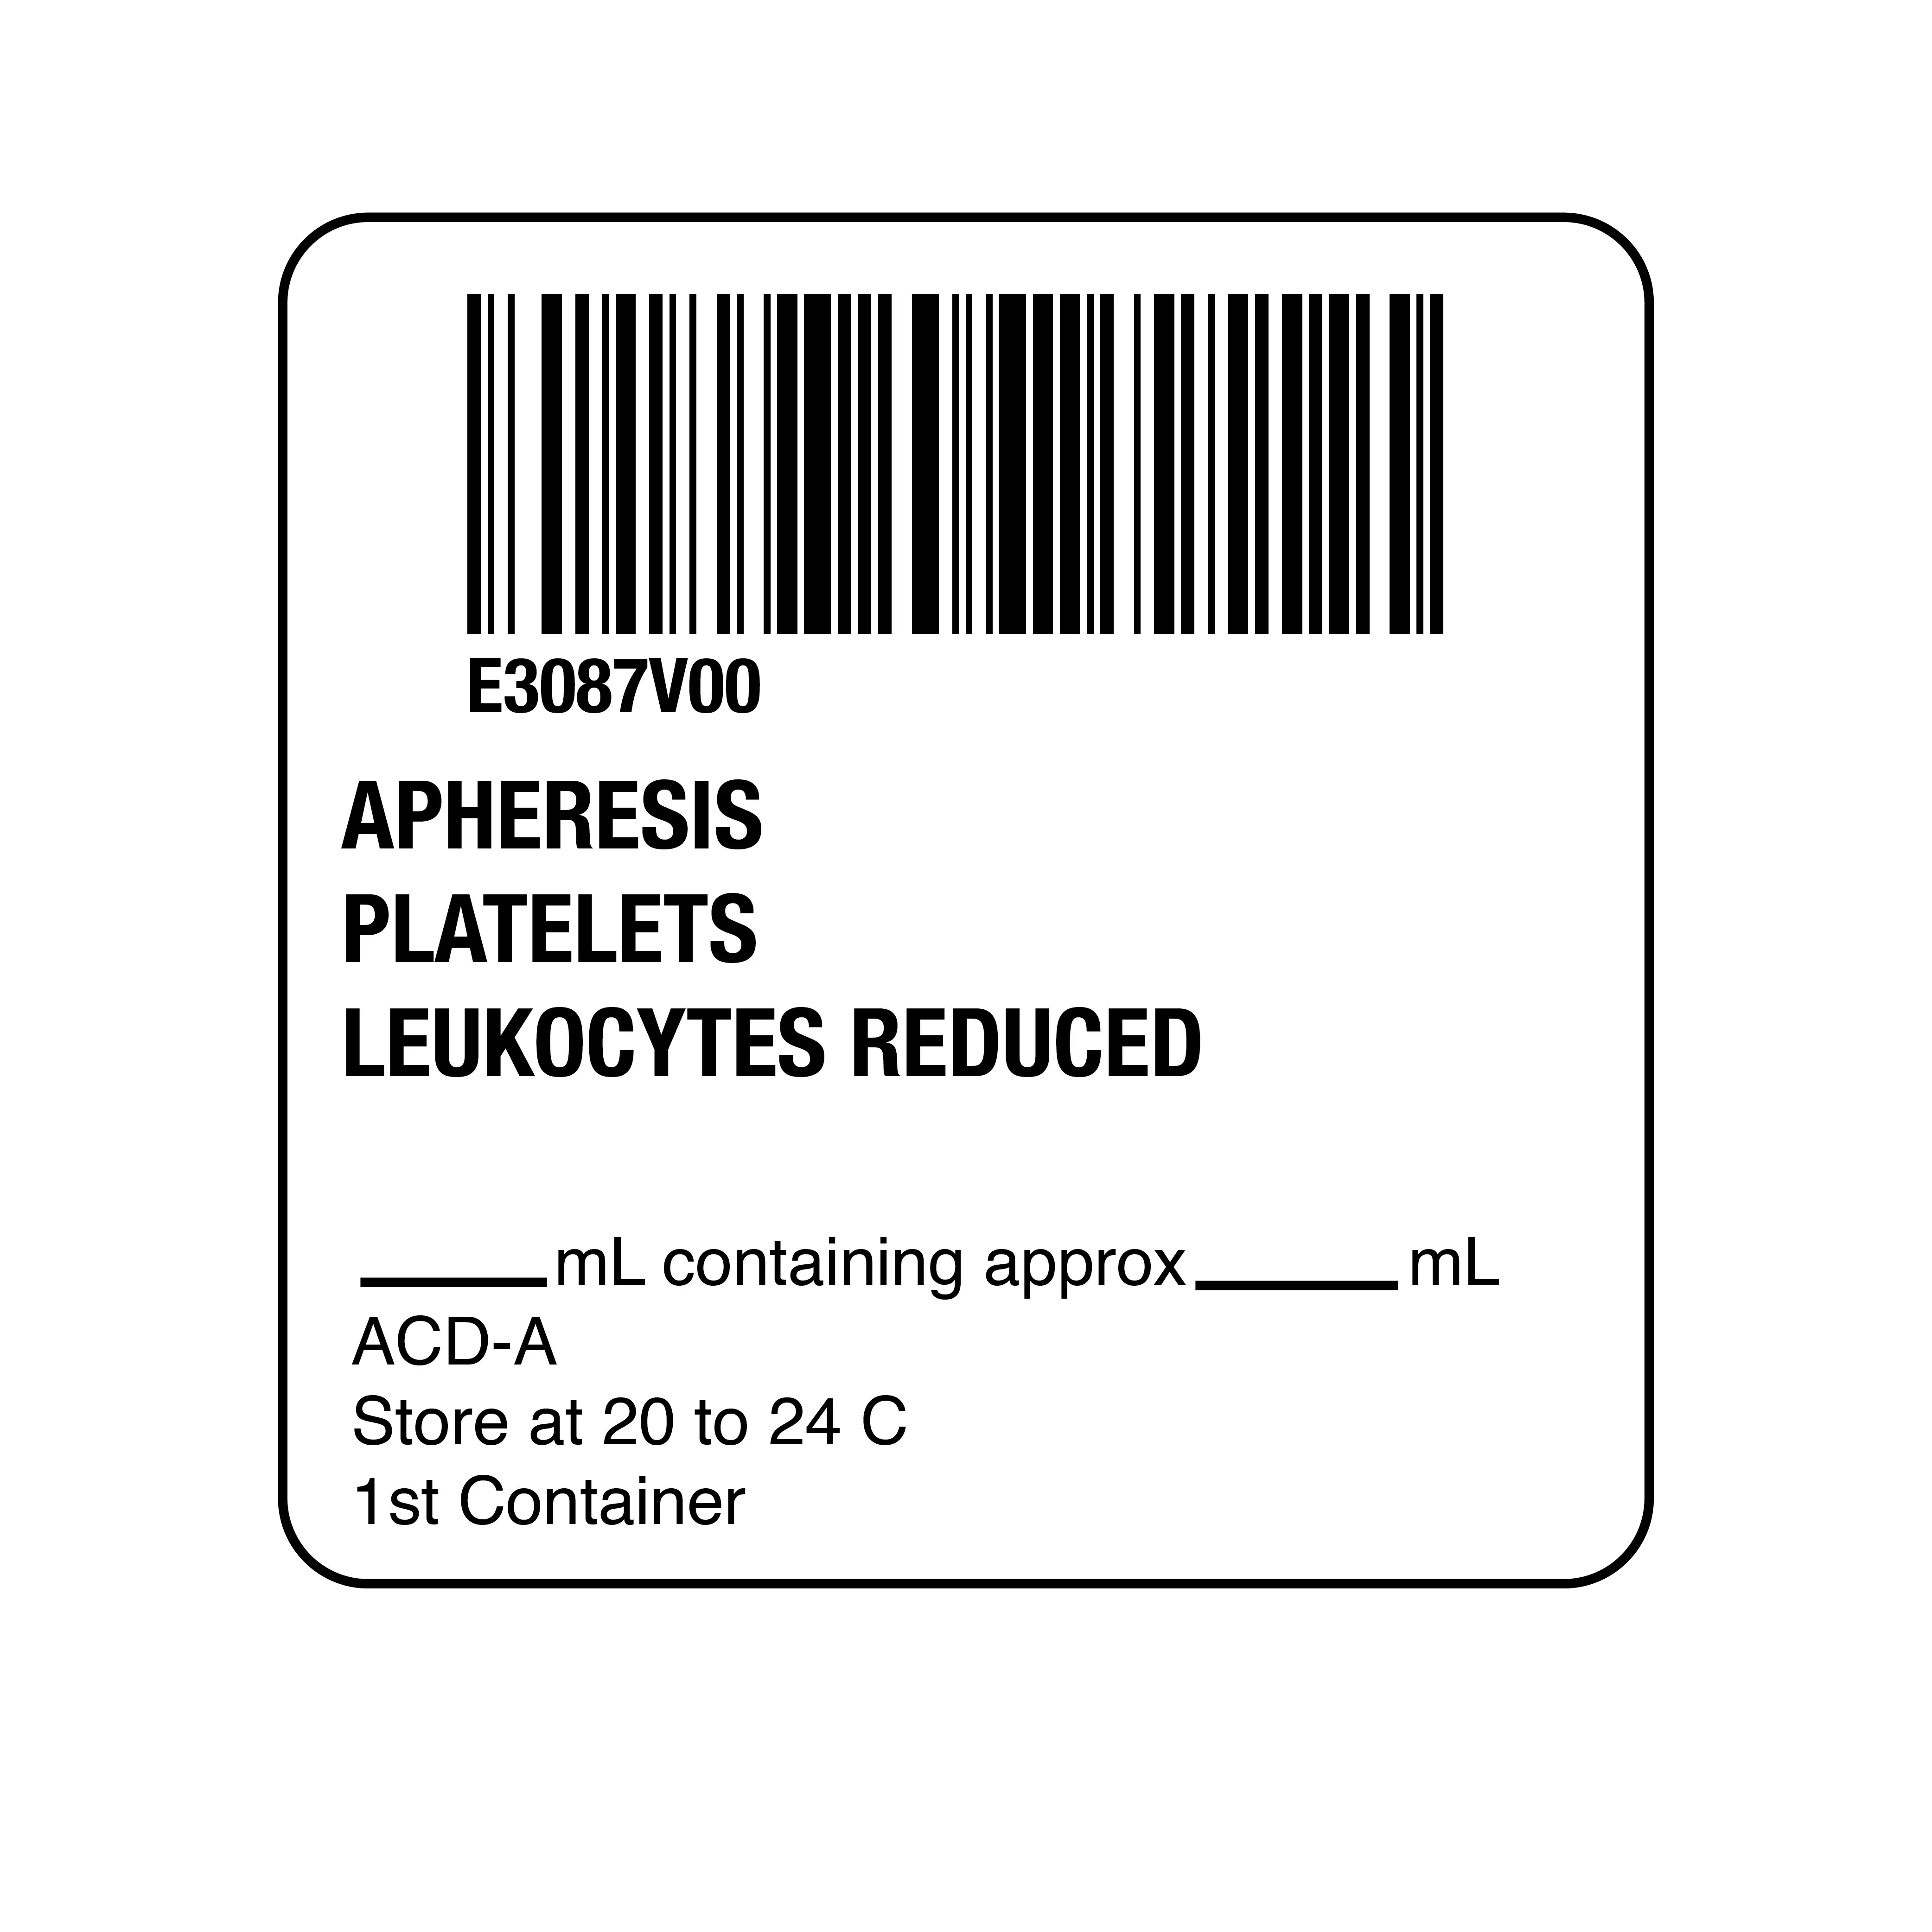 ISBT 128 Apheresis Platelets Irradiated Leukocyte